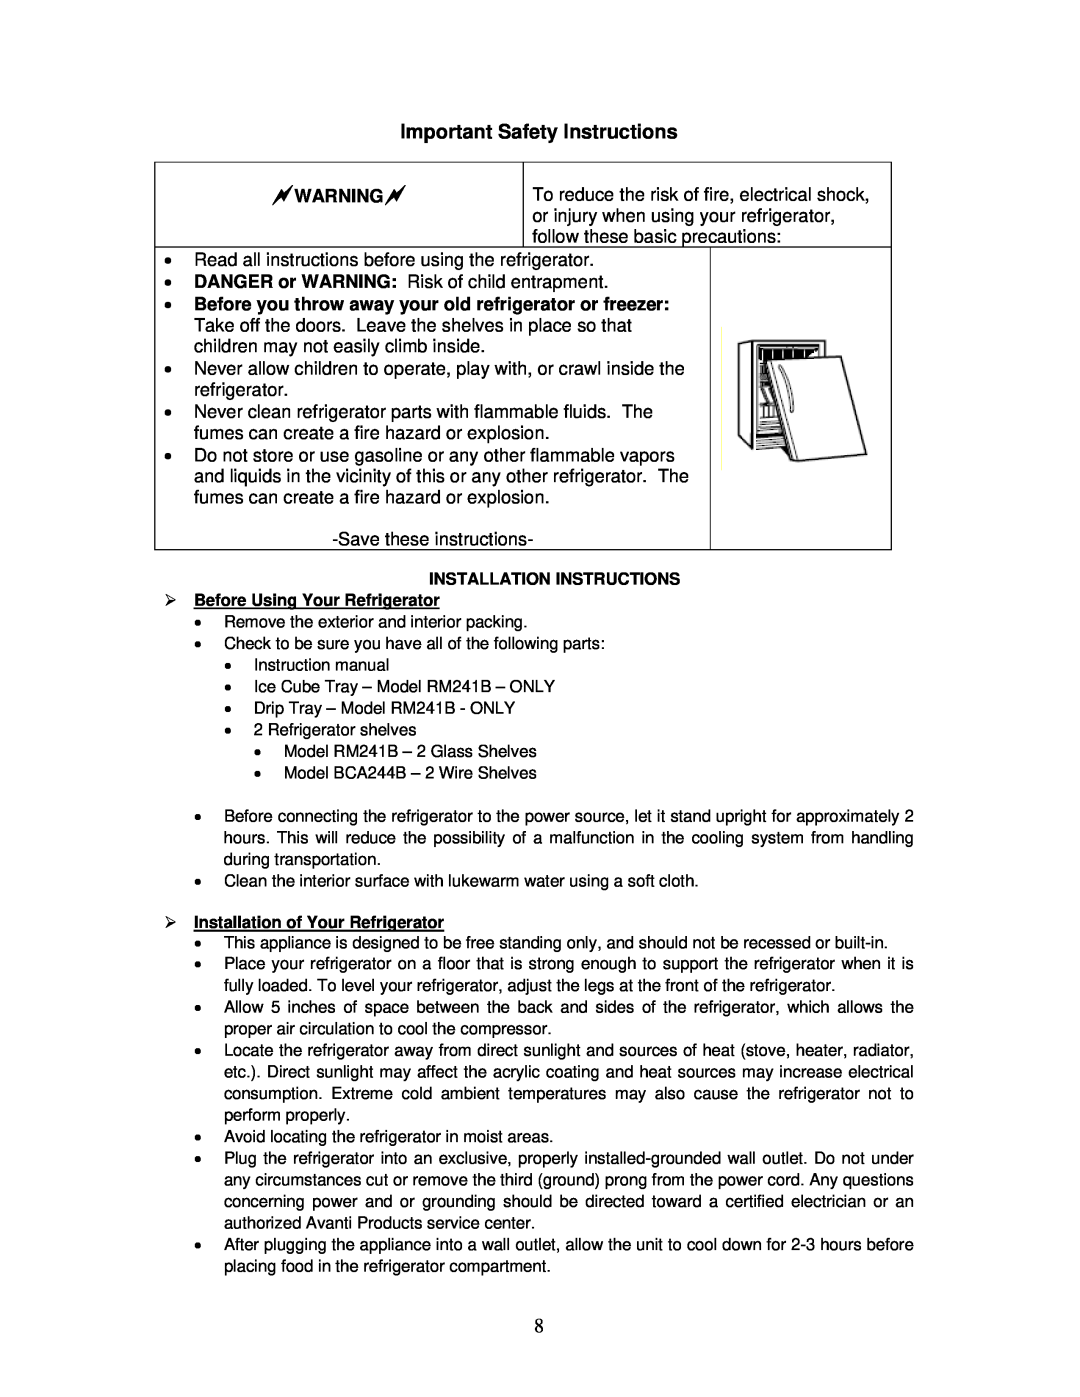 Avanti BCA244B, RM241B instruction manual Important Safety Instructions, Warning 